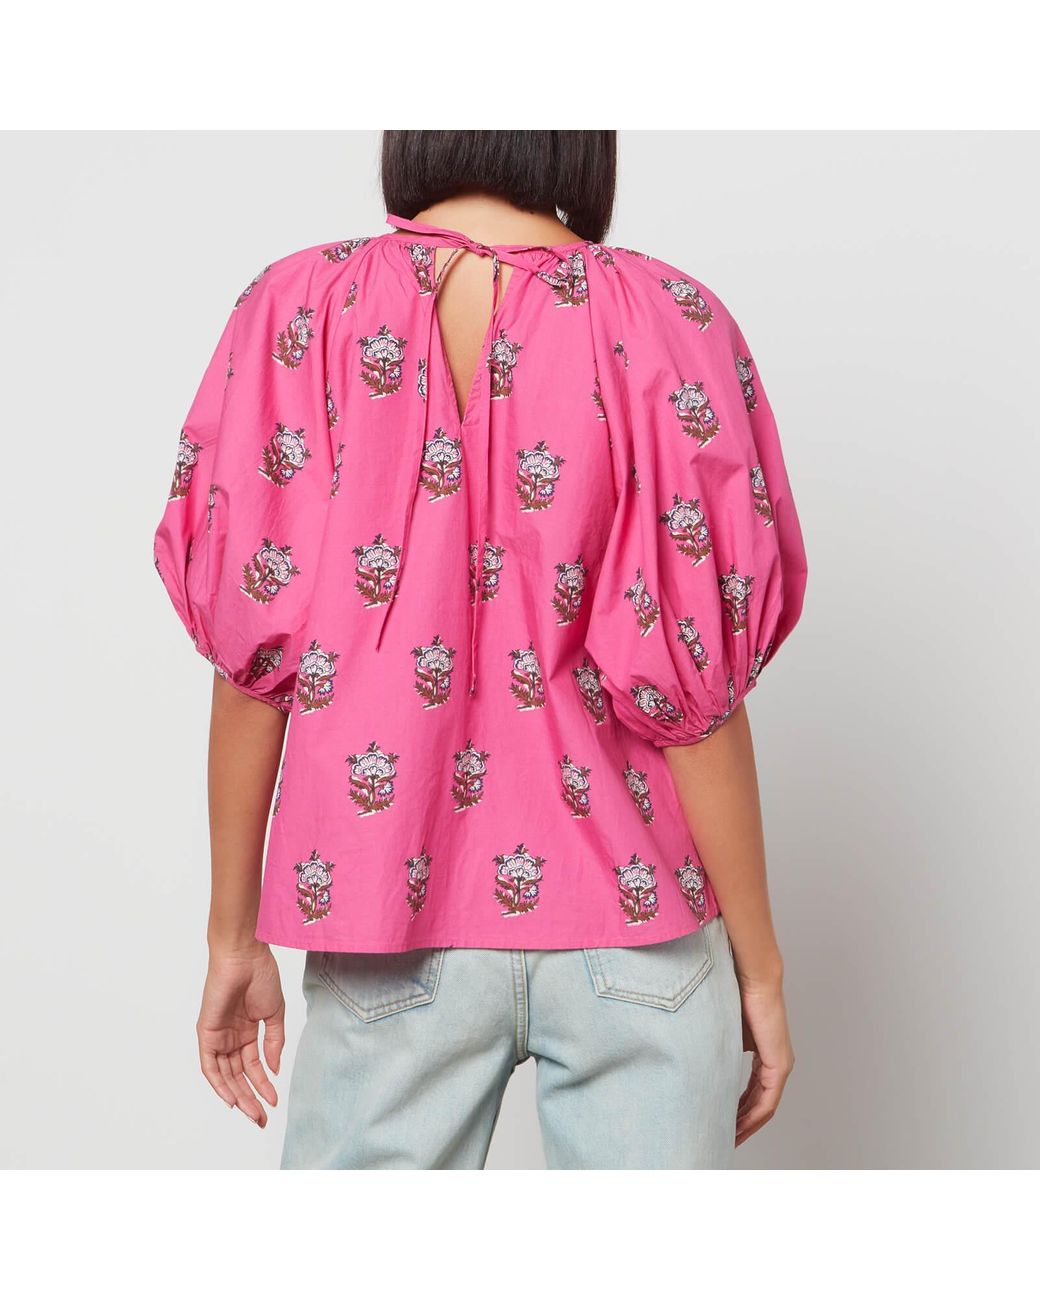 RHODE Rowan Floral-print Cotton Blouse in Pink | Lyst